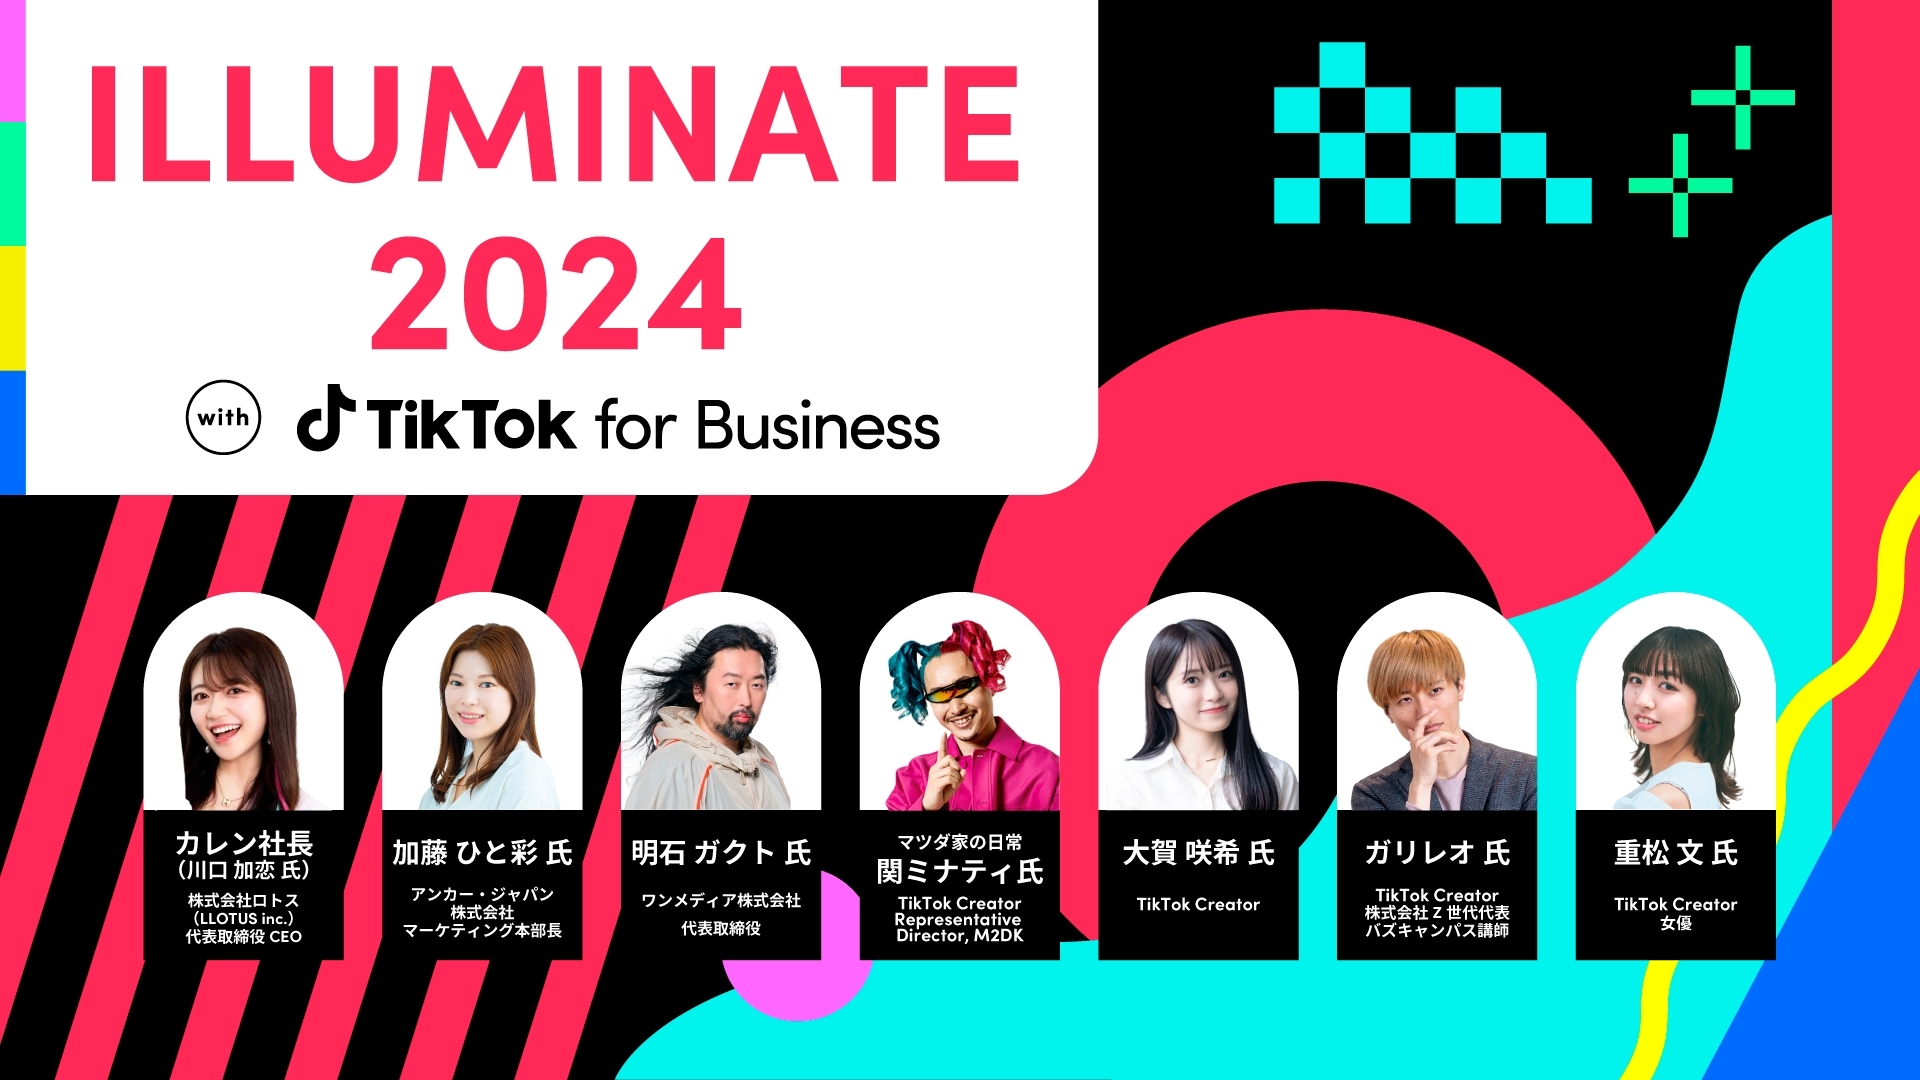 「ILLUMINATE 2024  with TikTok for Business」登壇のお知らせの画像